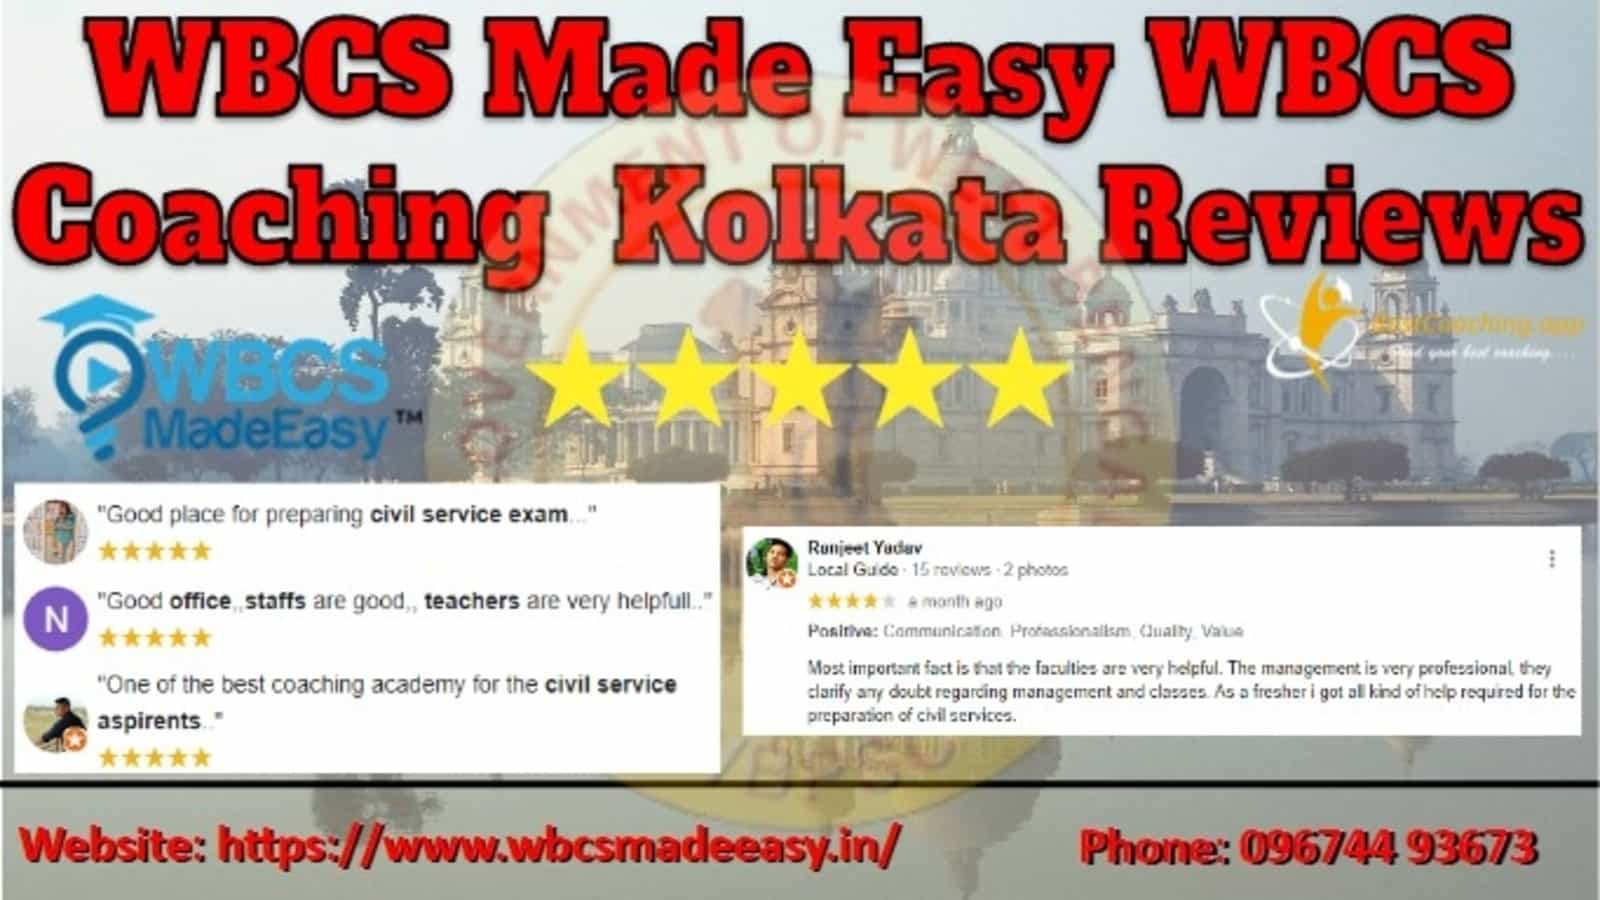 WBCS Made Easy WBCS Coaching Kolkata Reviews